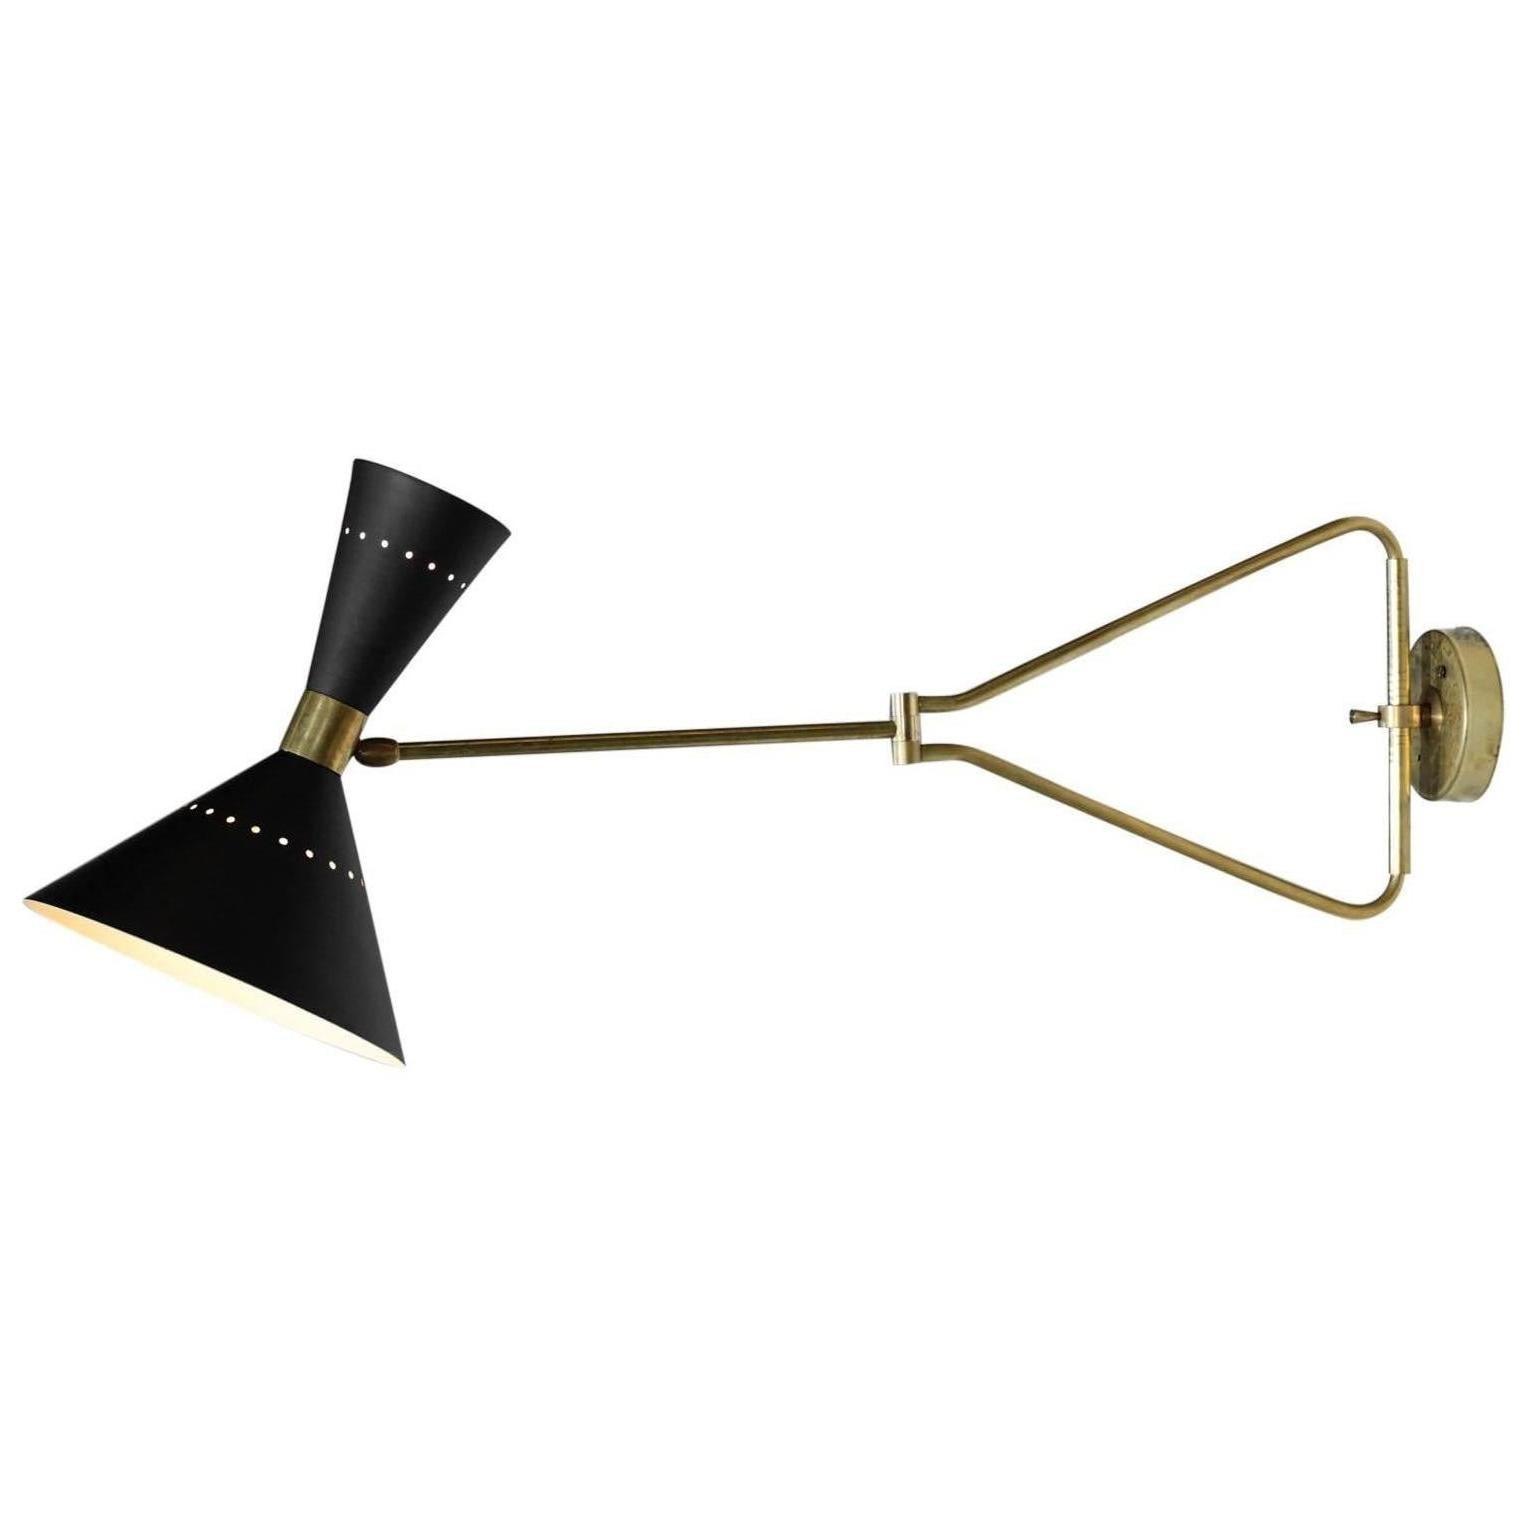 Italian Adjustable Wall Light "Rafaela" Black Modern Brass